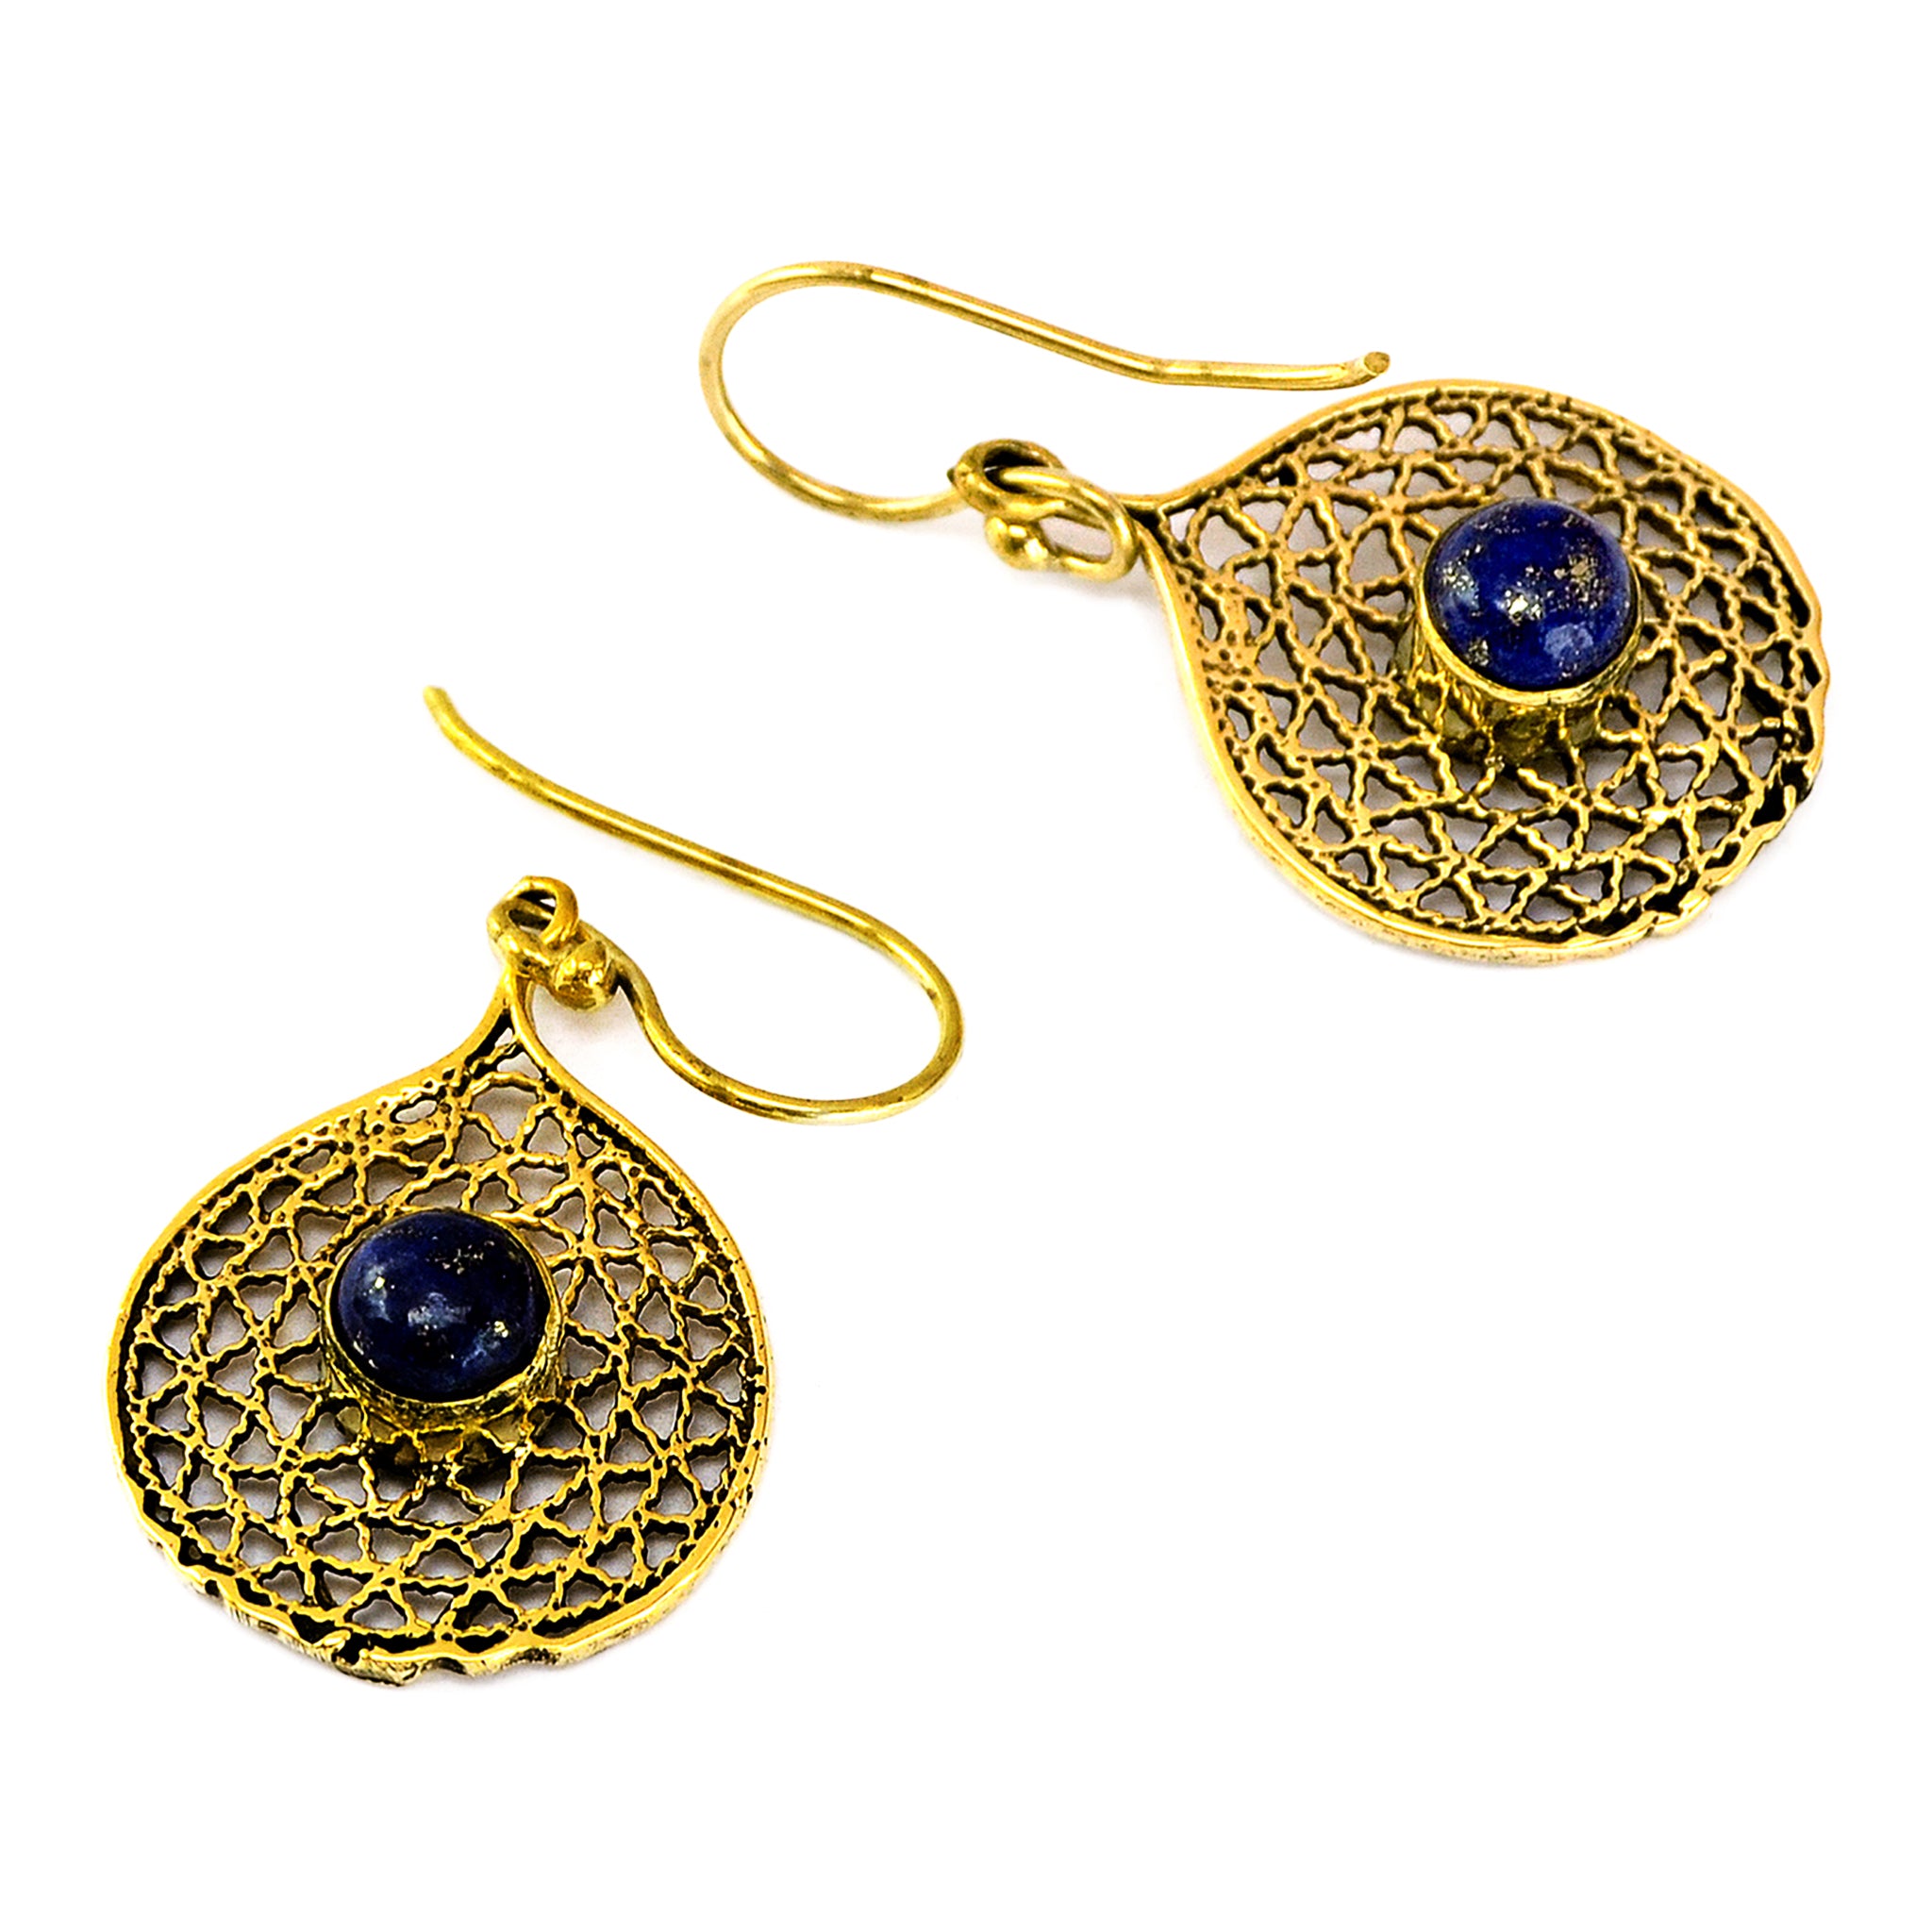 Indian filigree earrings with lapis lazuli stone